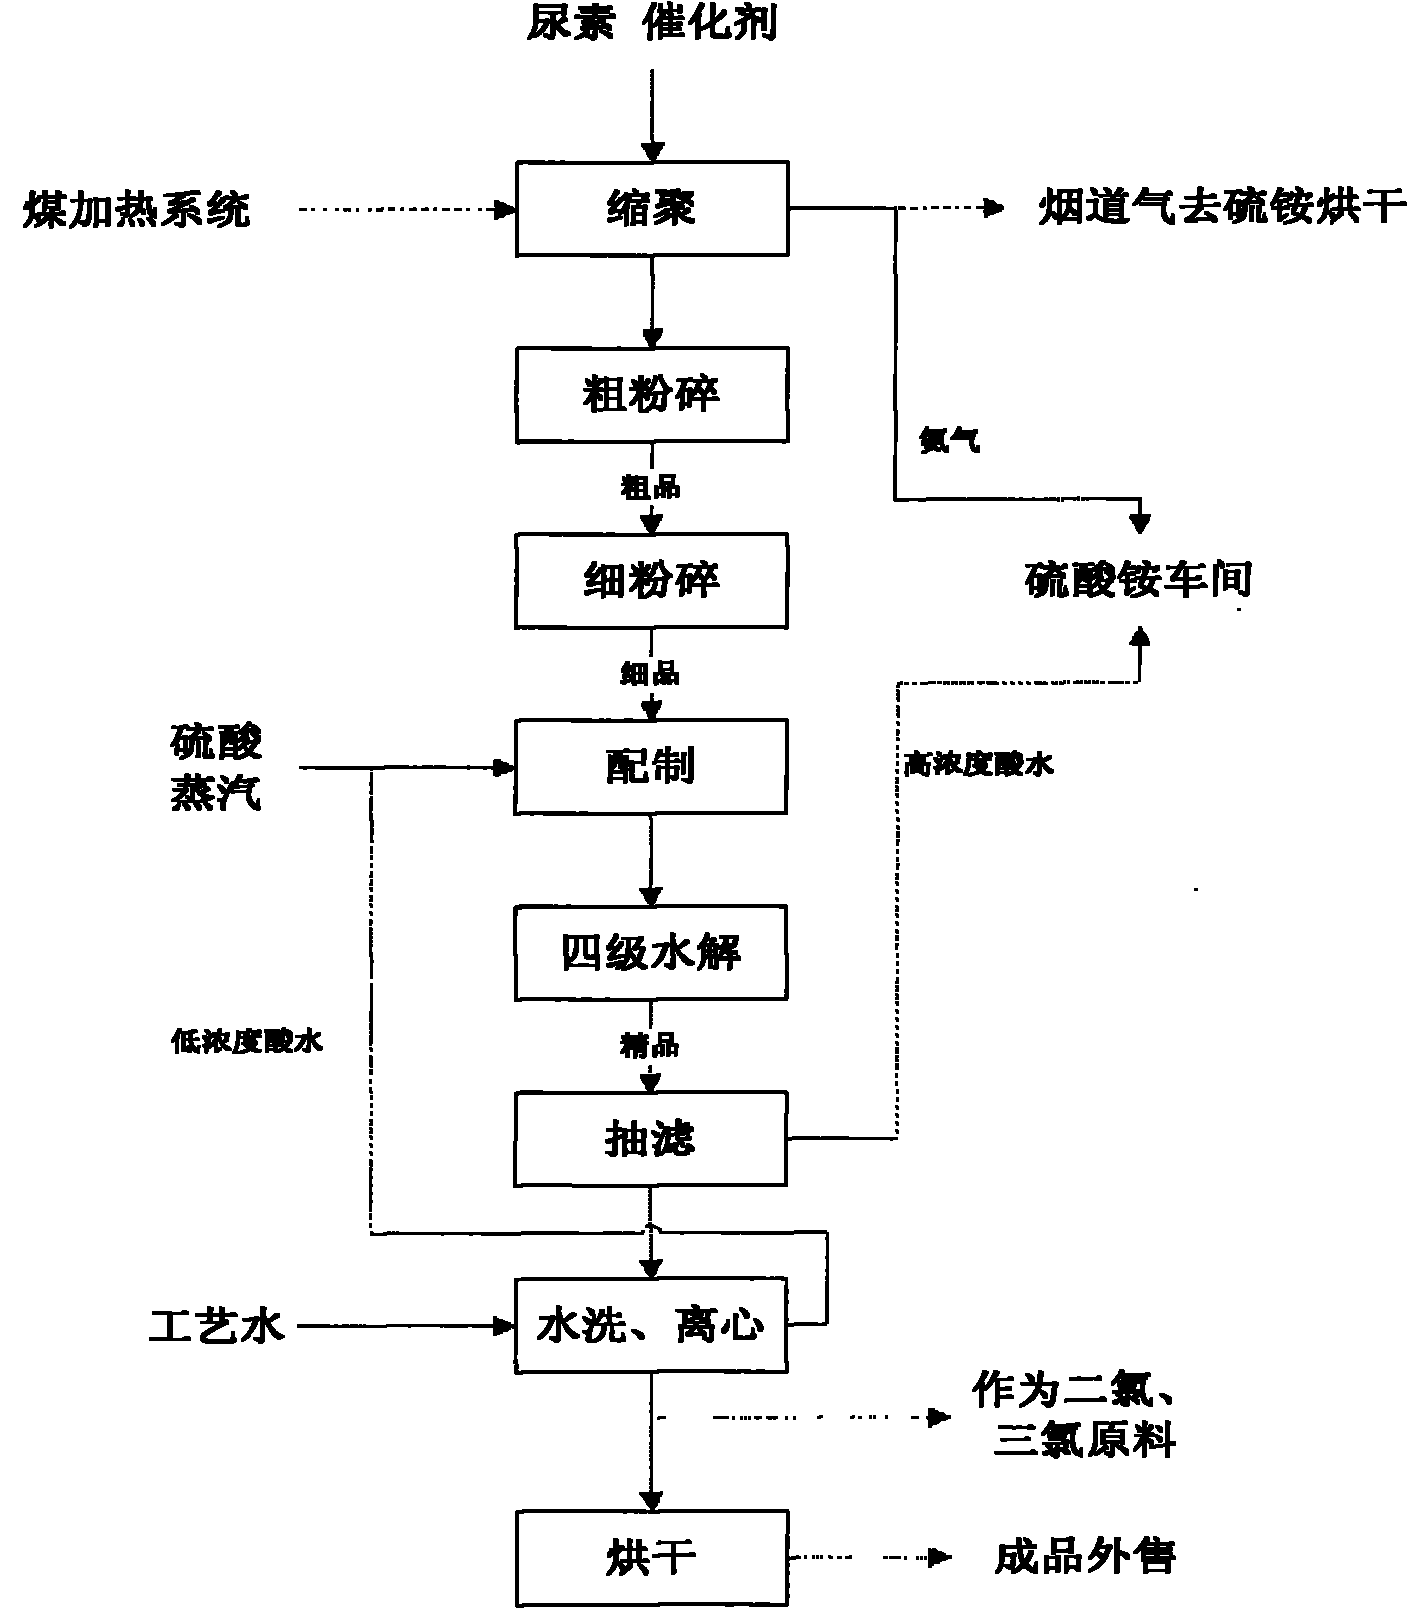 Production method of isocyanuric acid